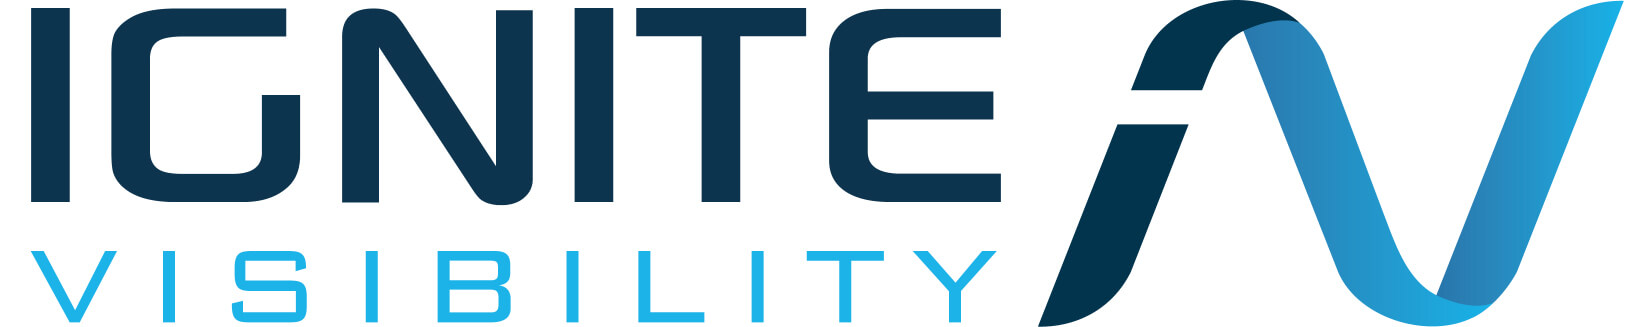 Best Global SEO Firm Logo: Ignite Visibility